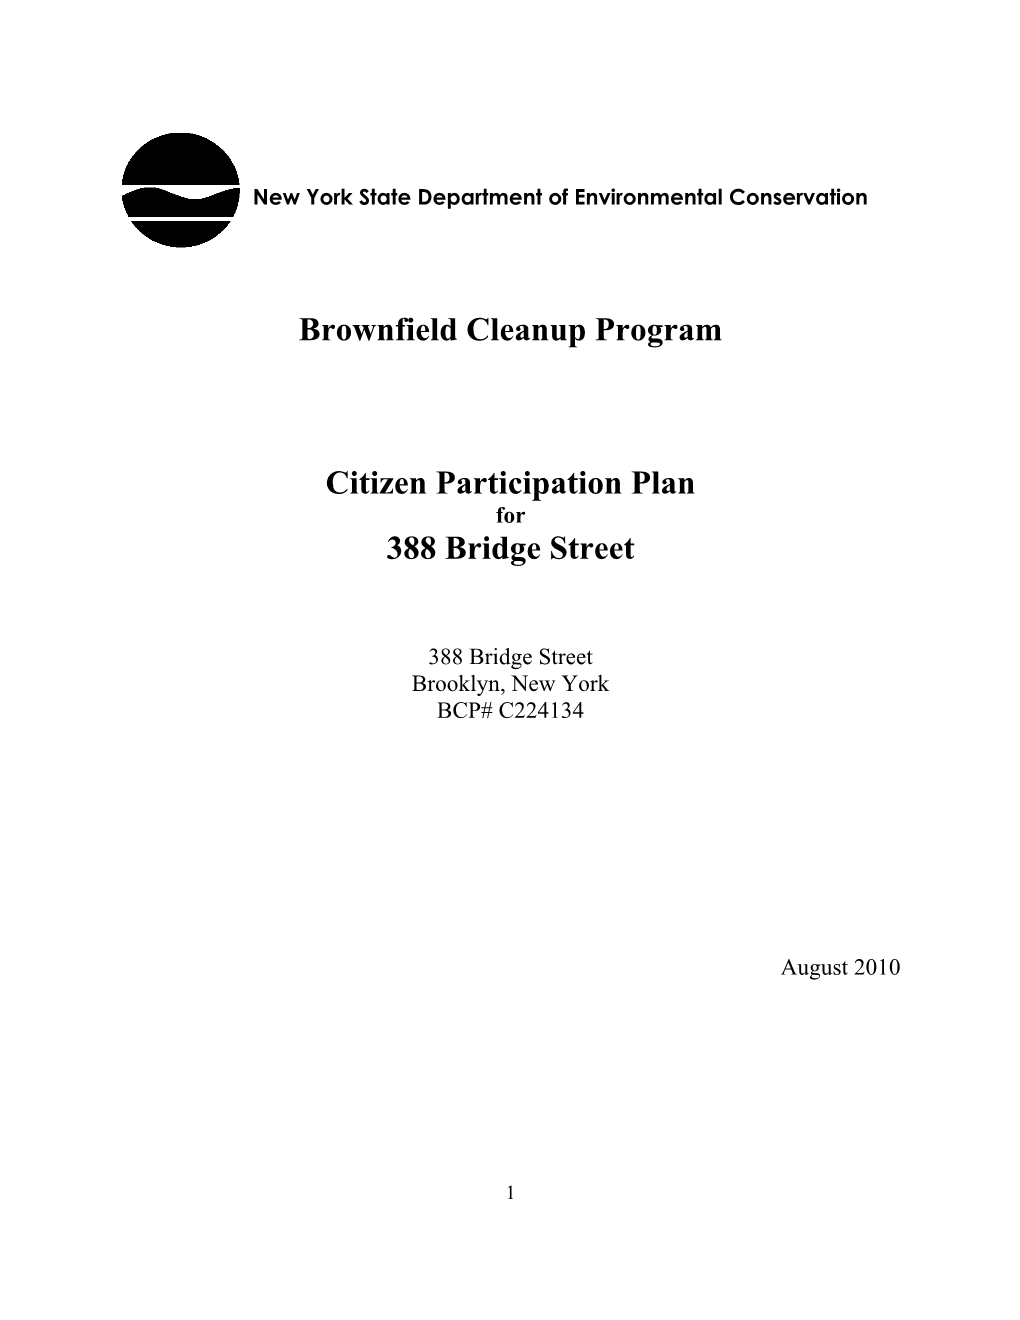 Brownfield Cleanup Program Citizen Participation Plan 388 Bridge Street